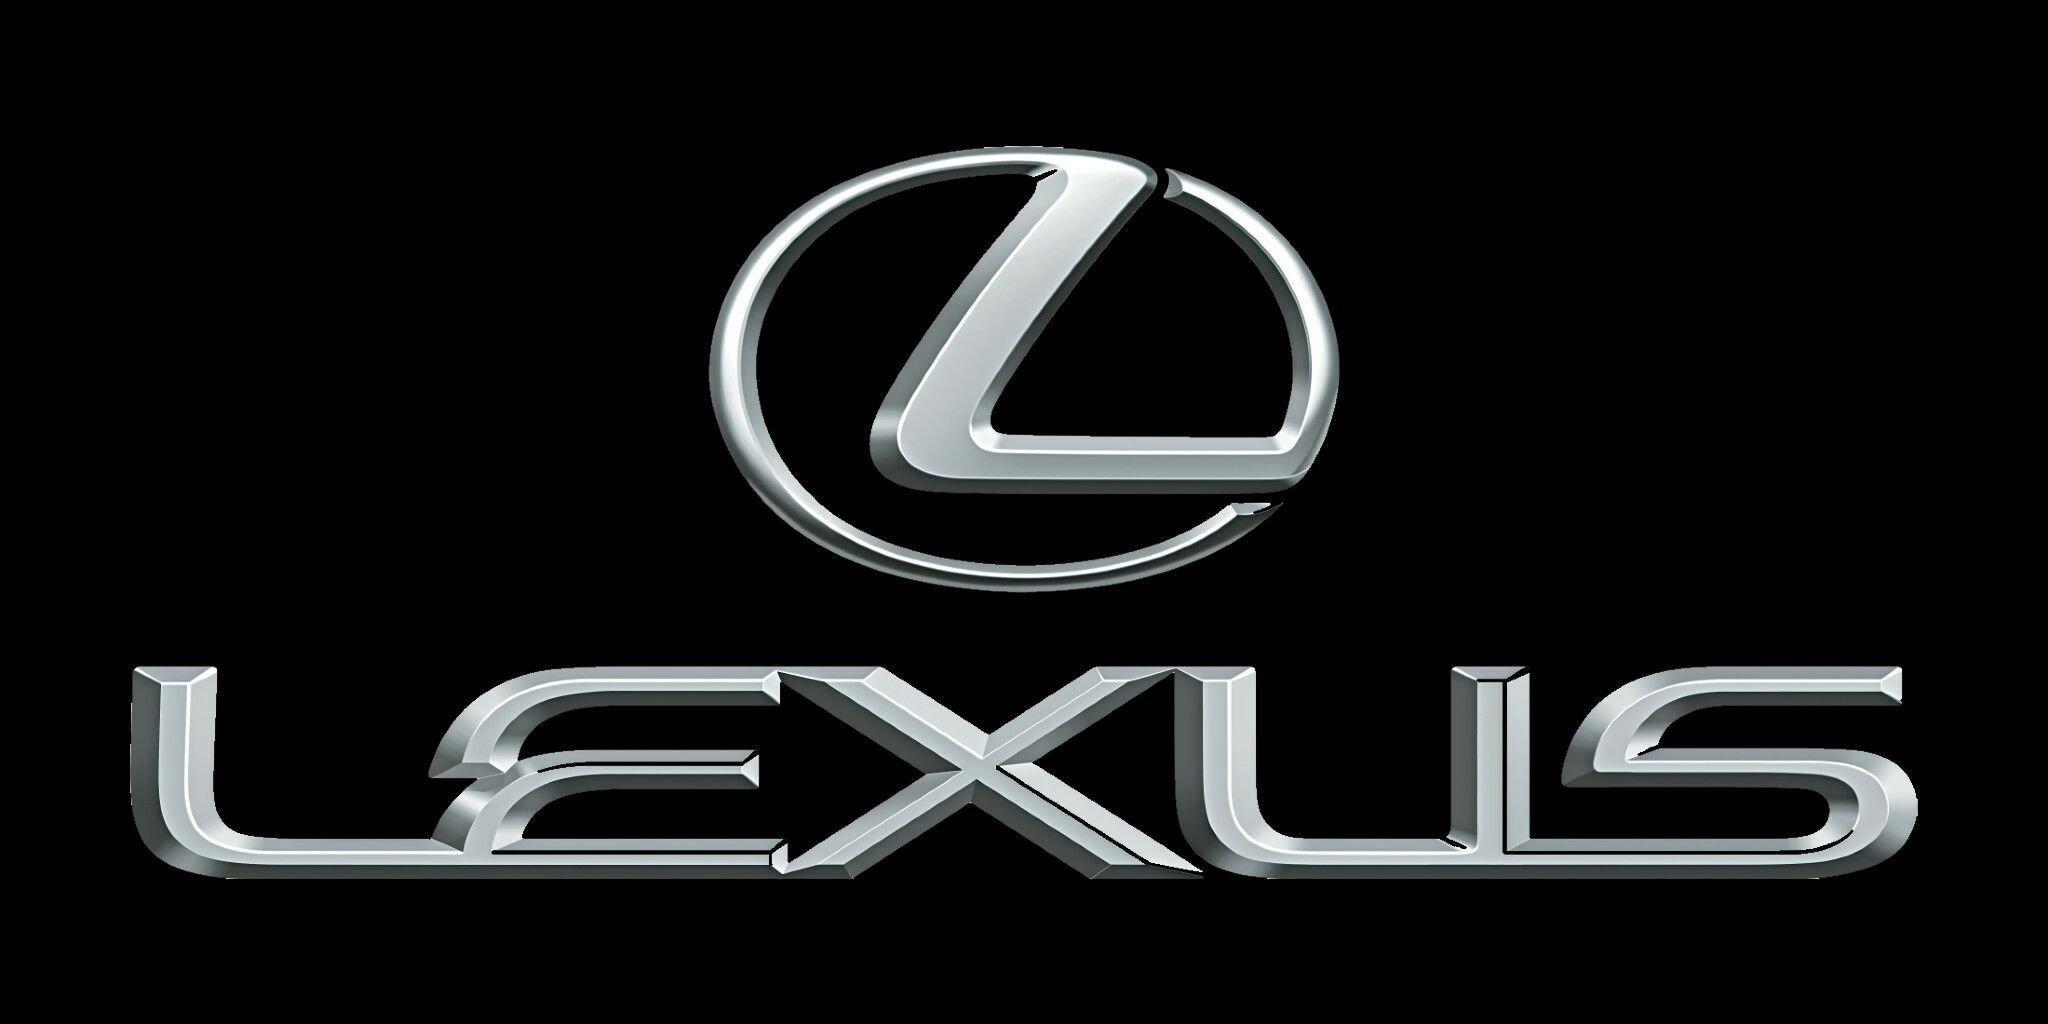 lexus logo wallpaper,text,font,automotive design,logo,vehicle